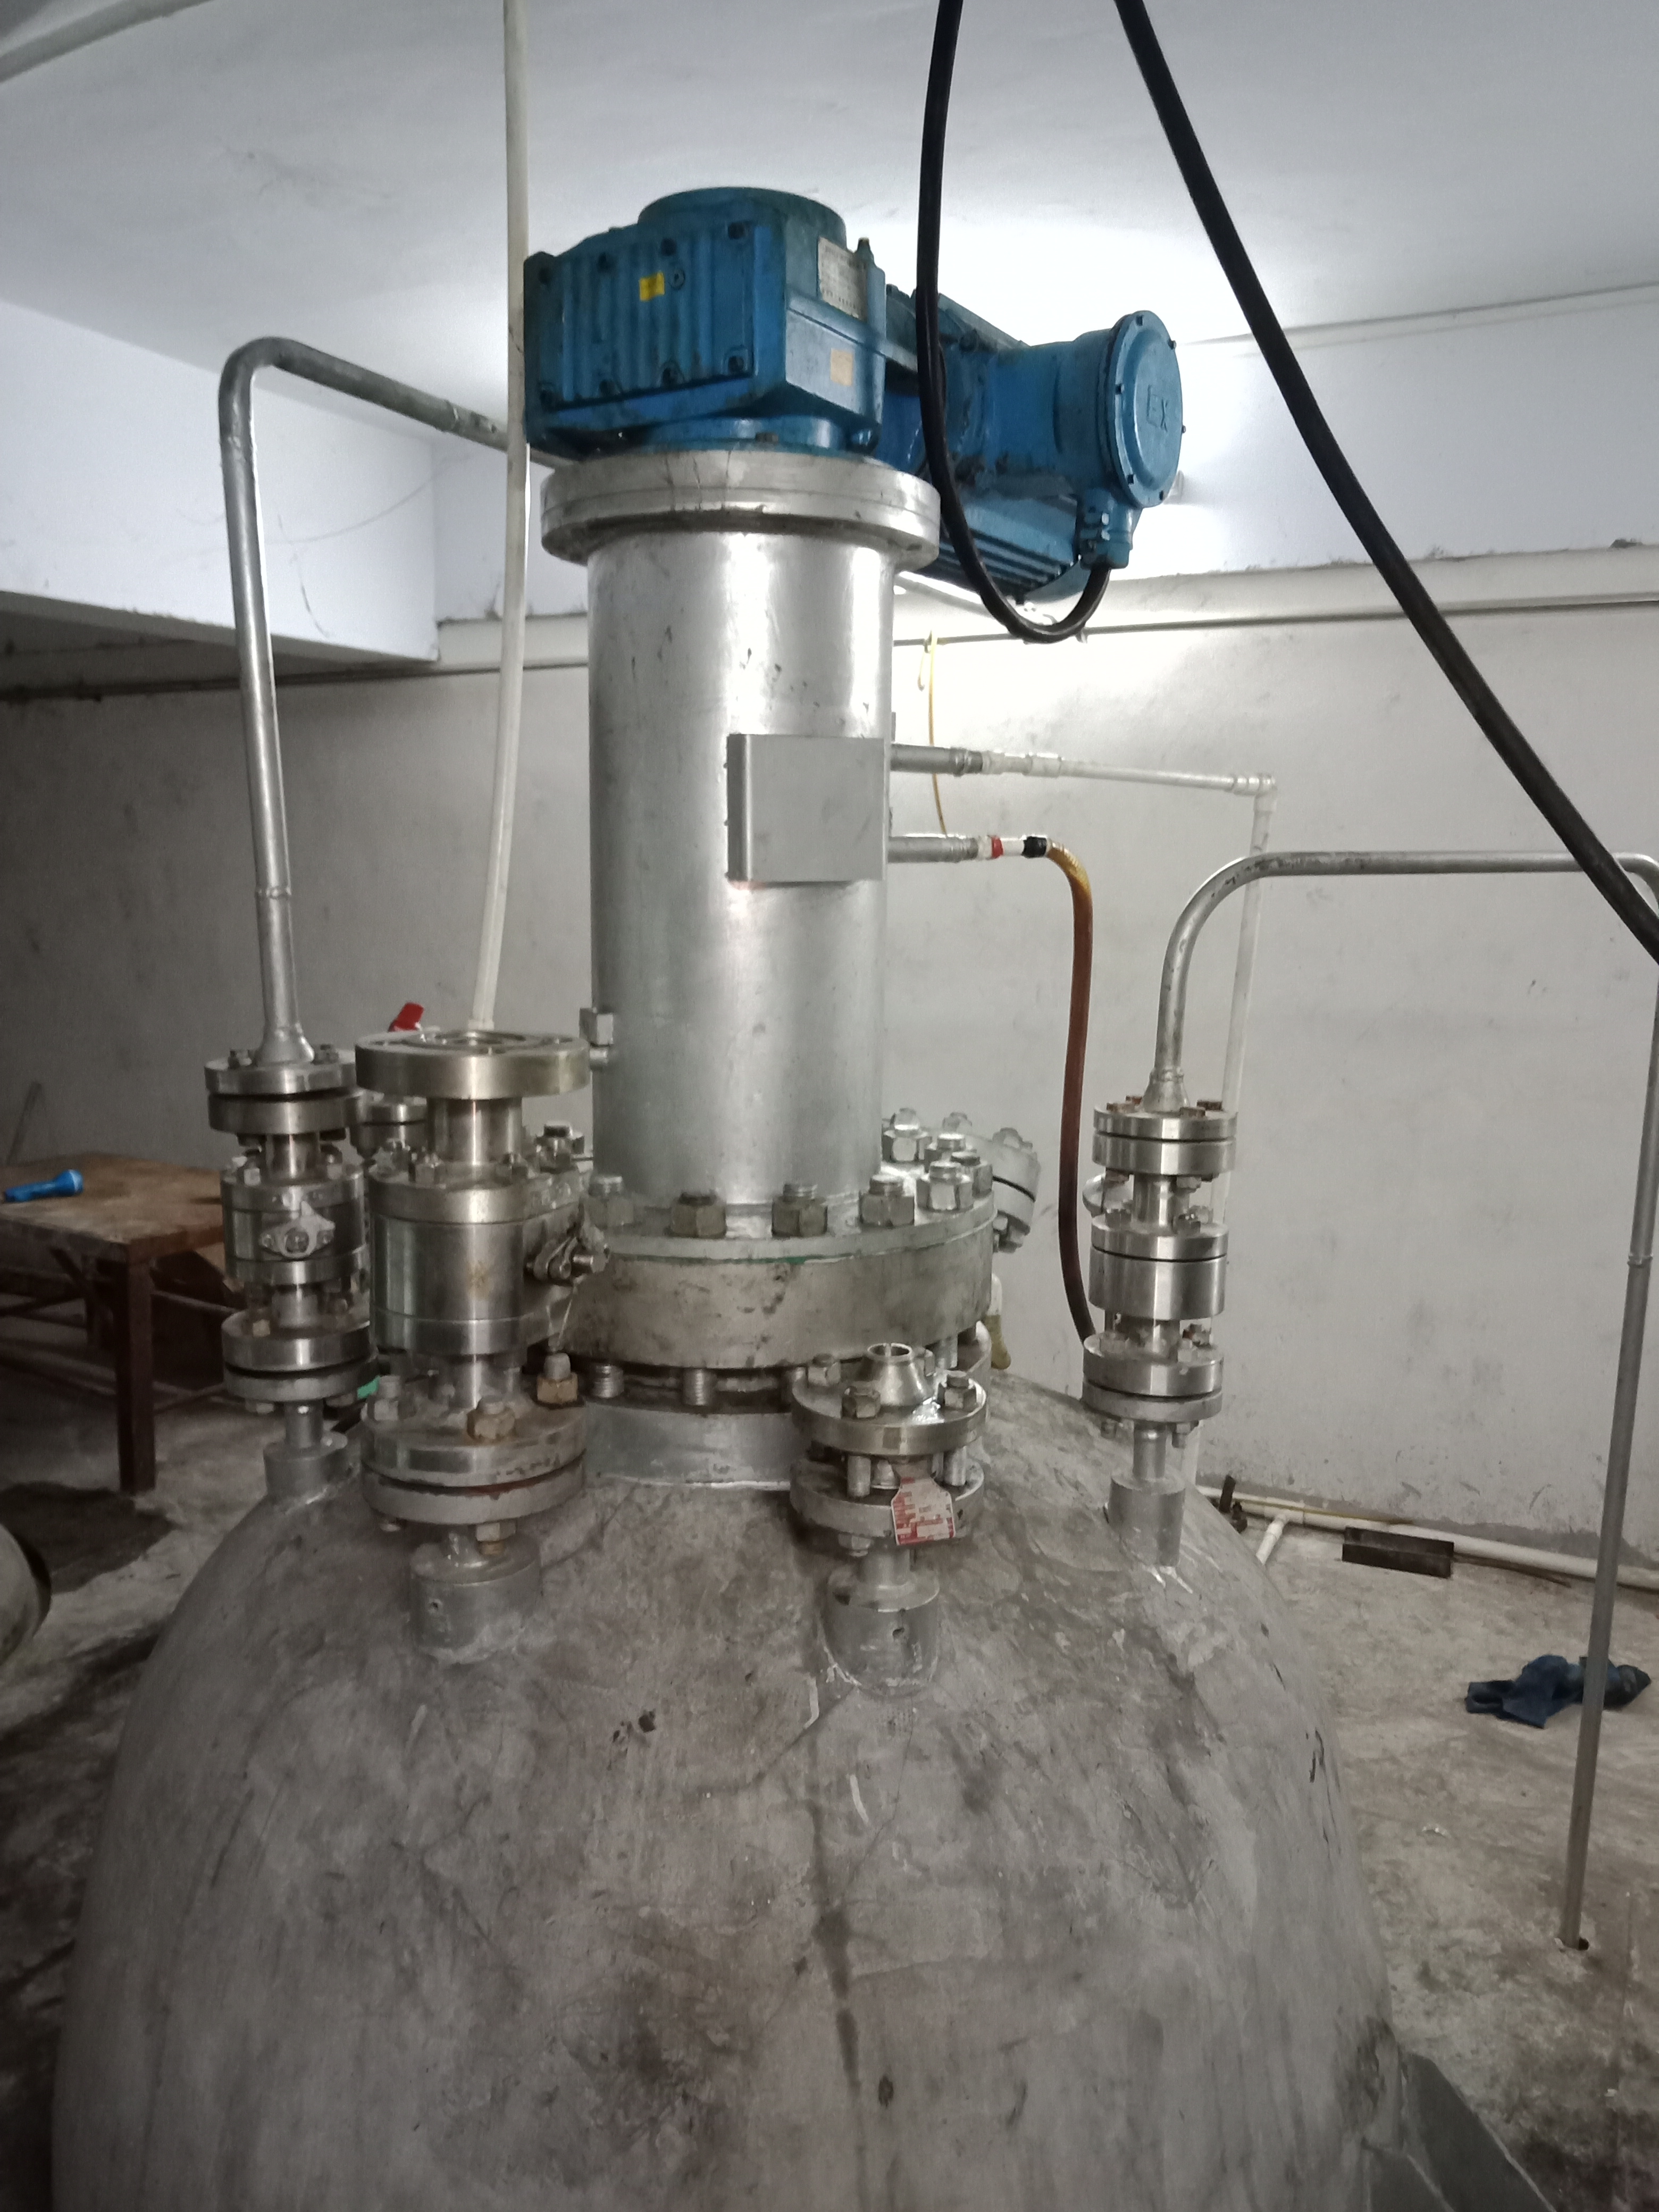 Catalytic oxidation reactor